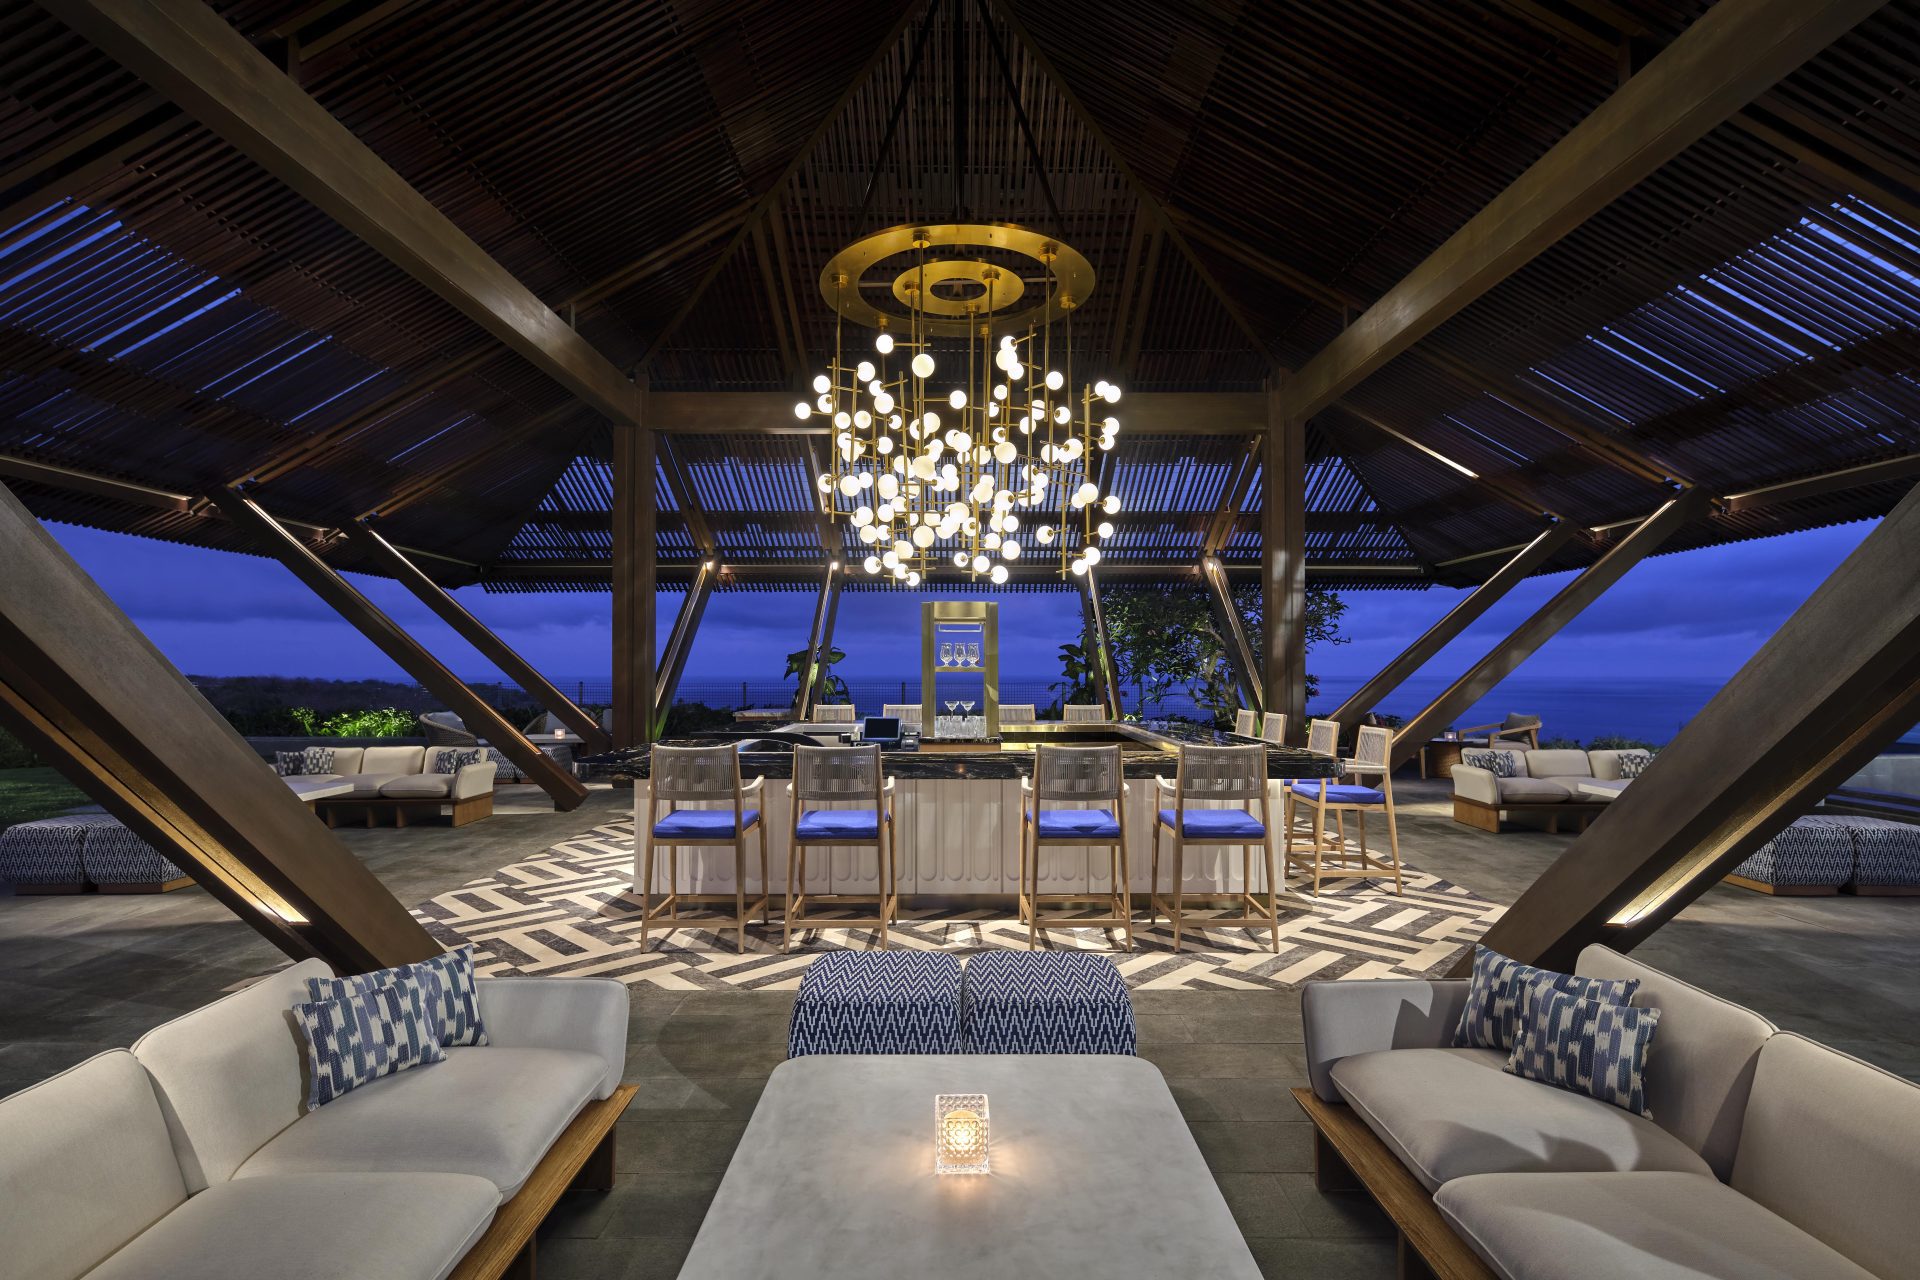 Umana Bali by LXR Hotels & Resorts